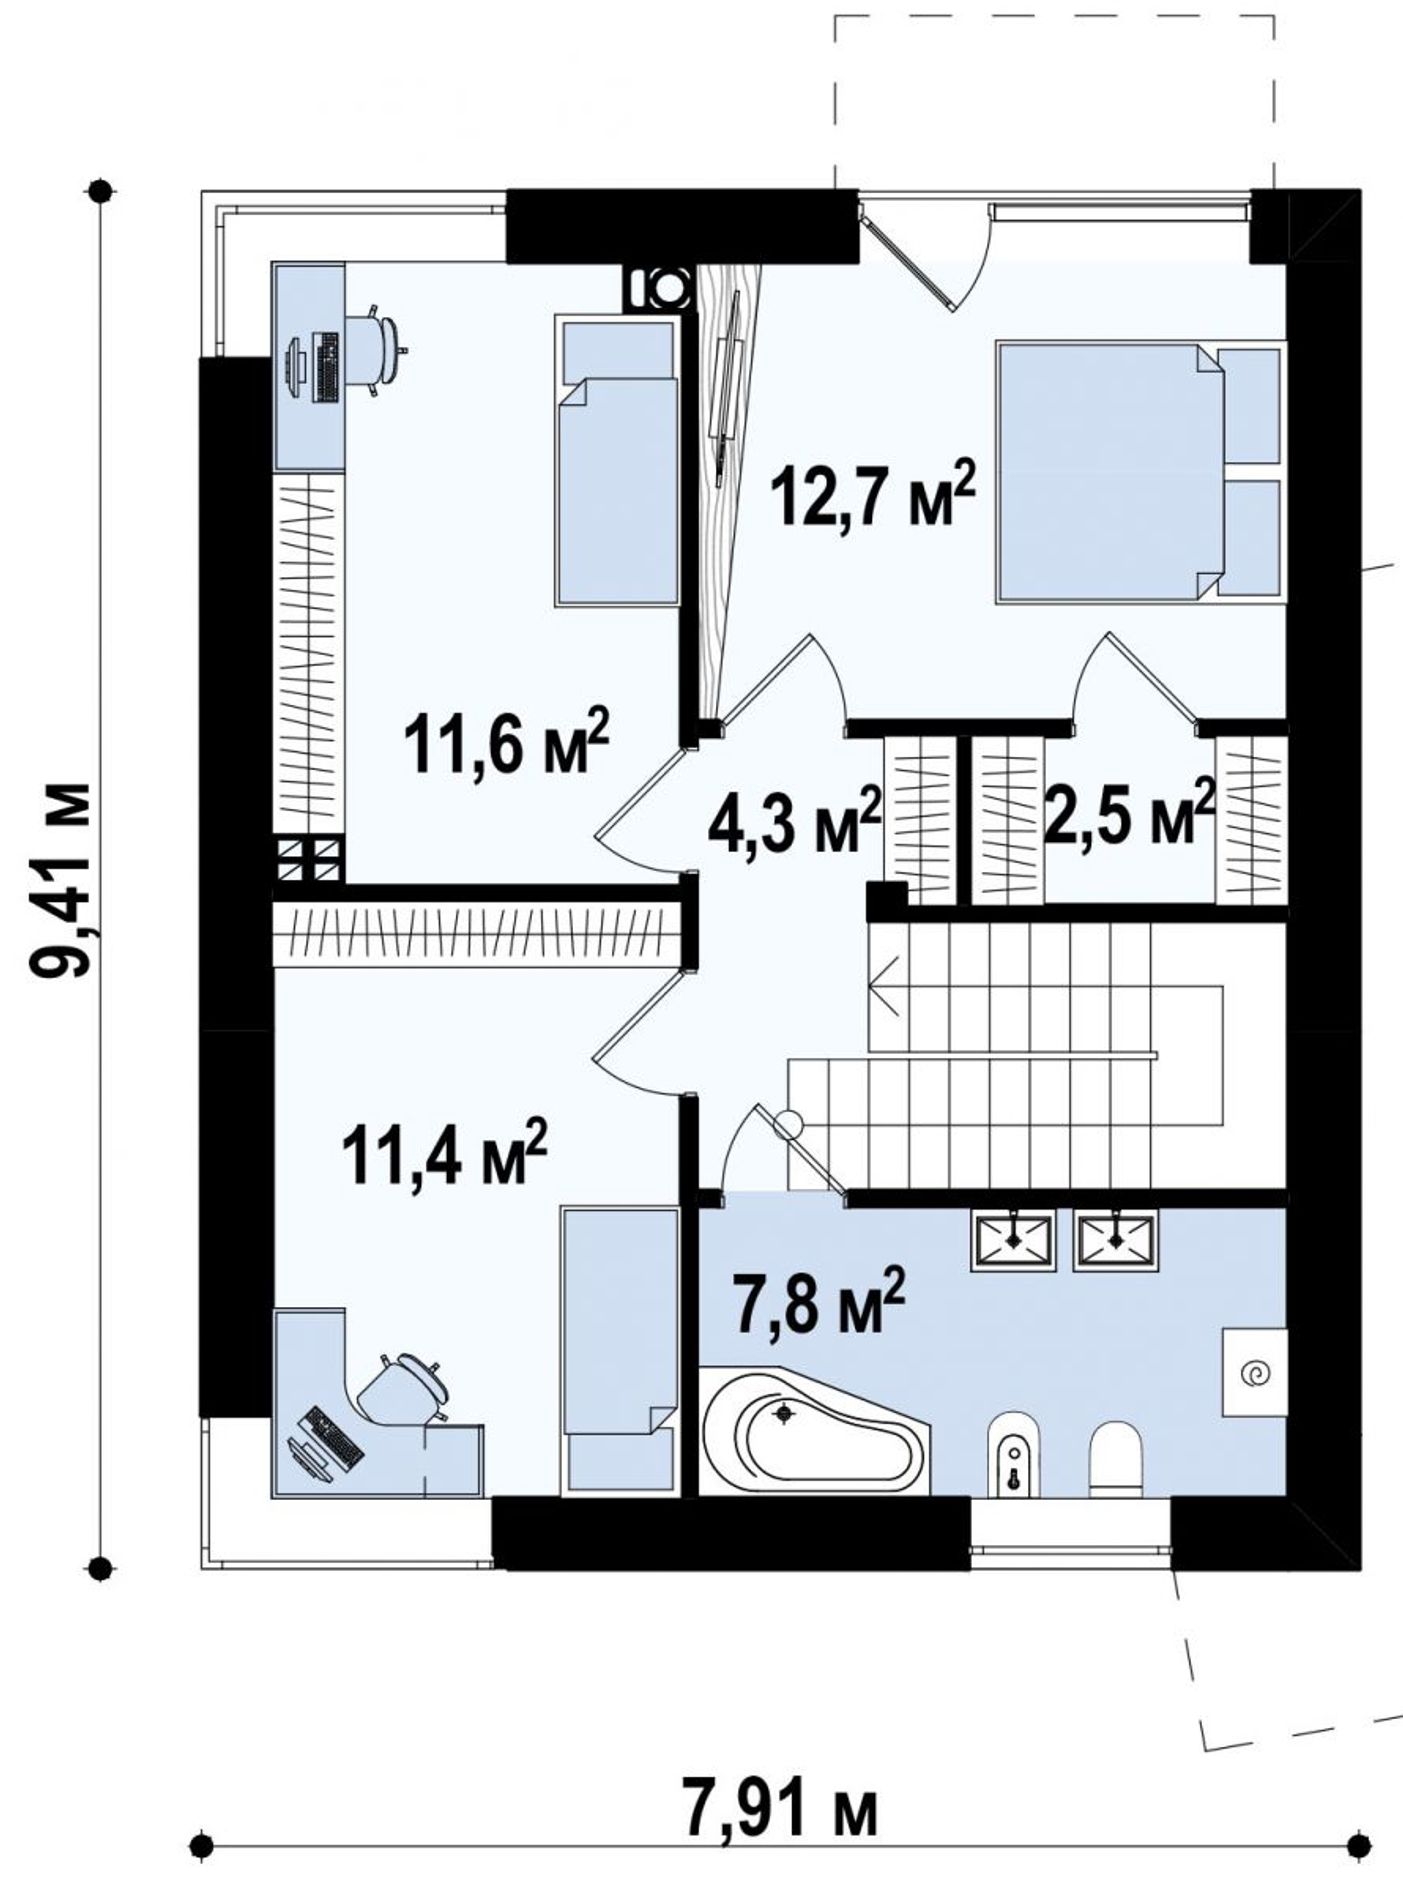 2-ой этаж - план проекта Zx51